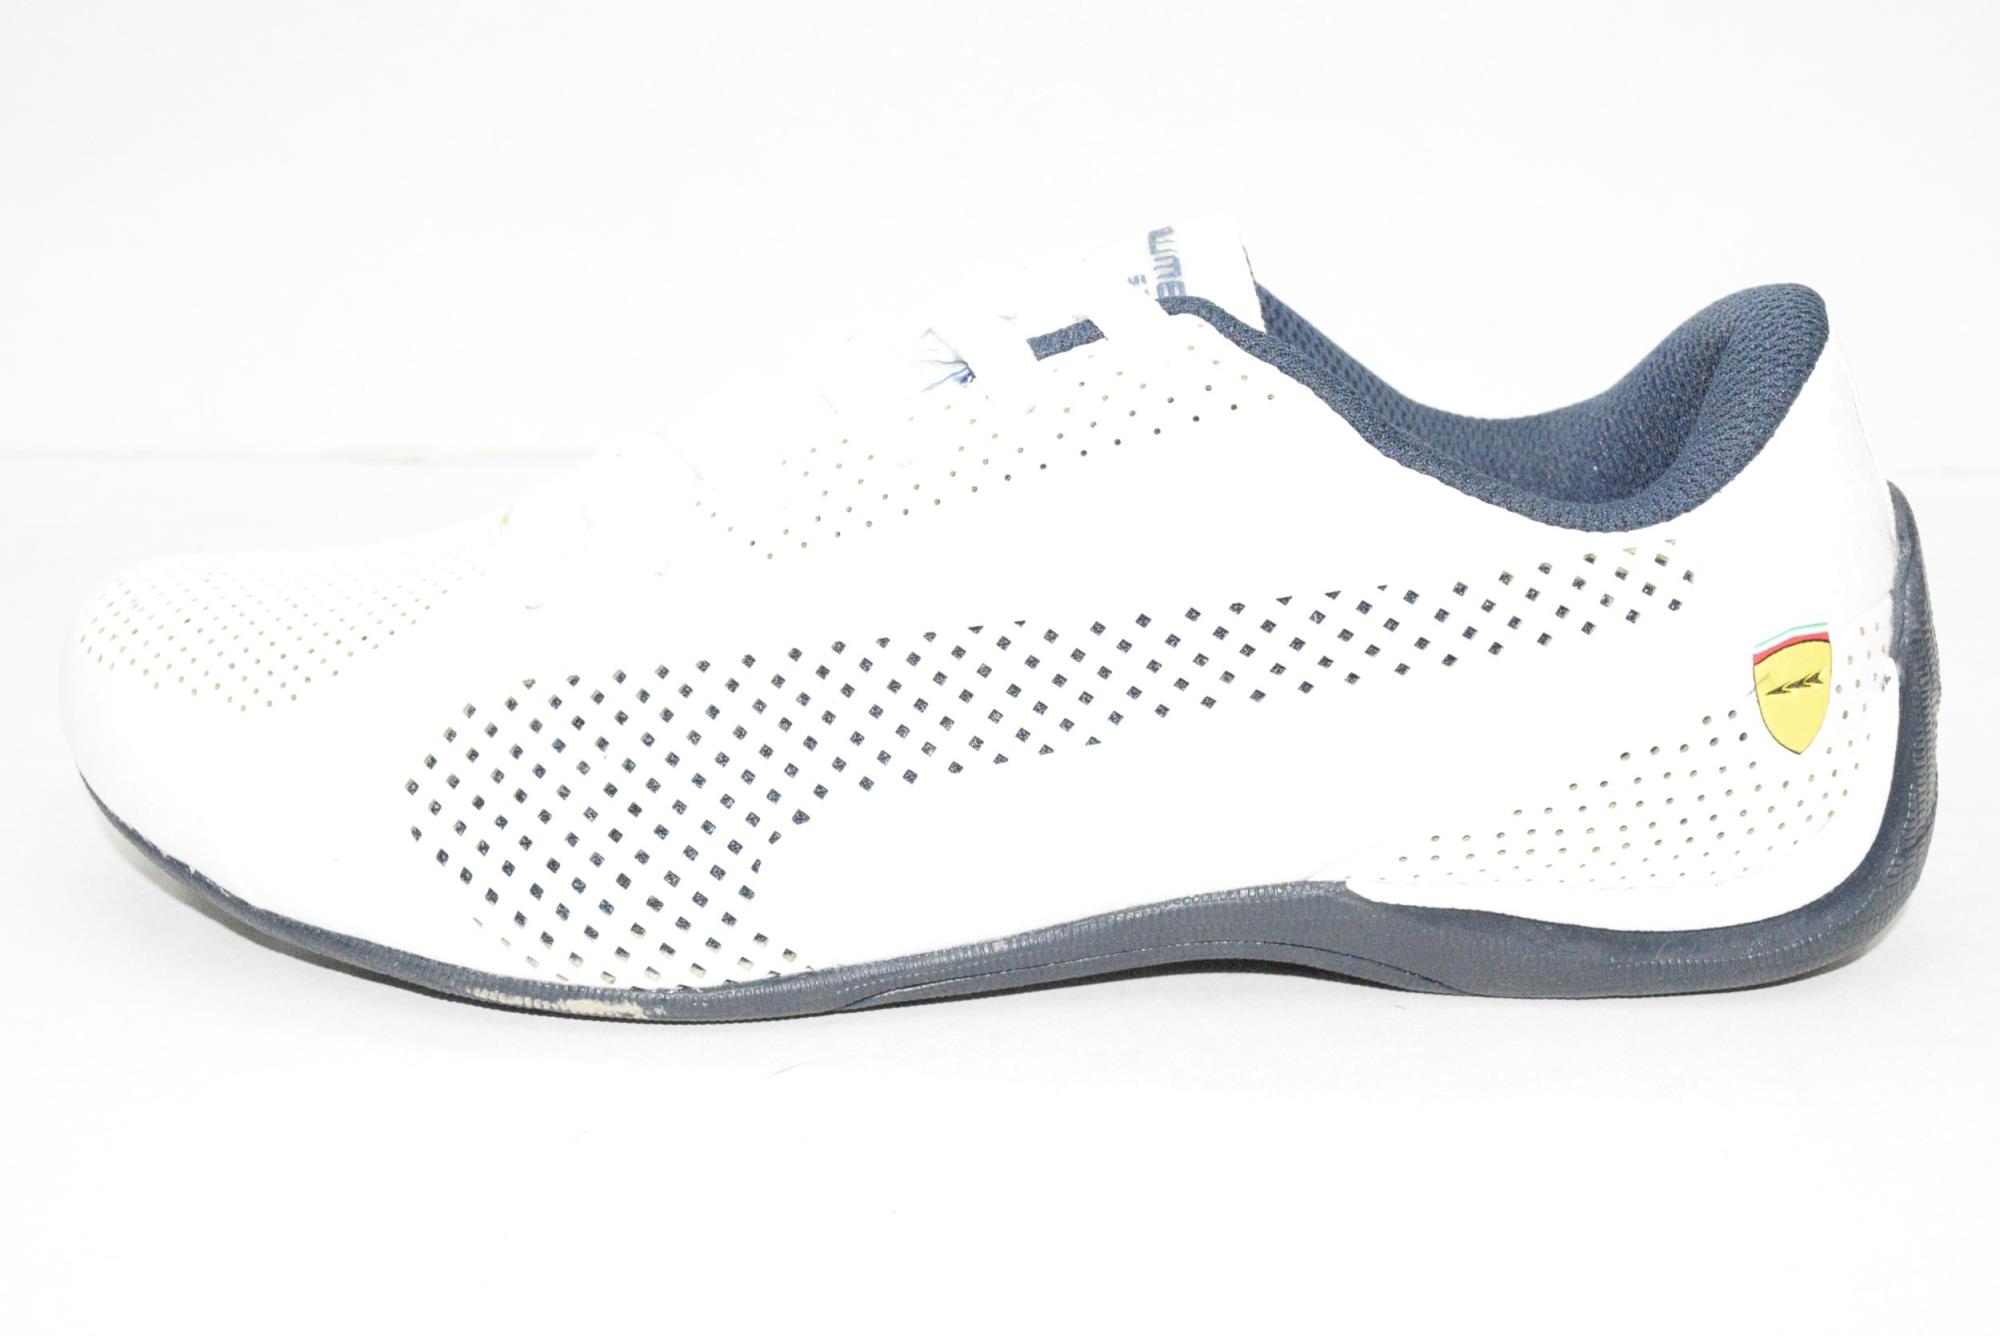 columbus sports shoes for men